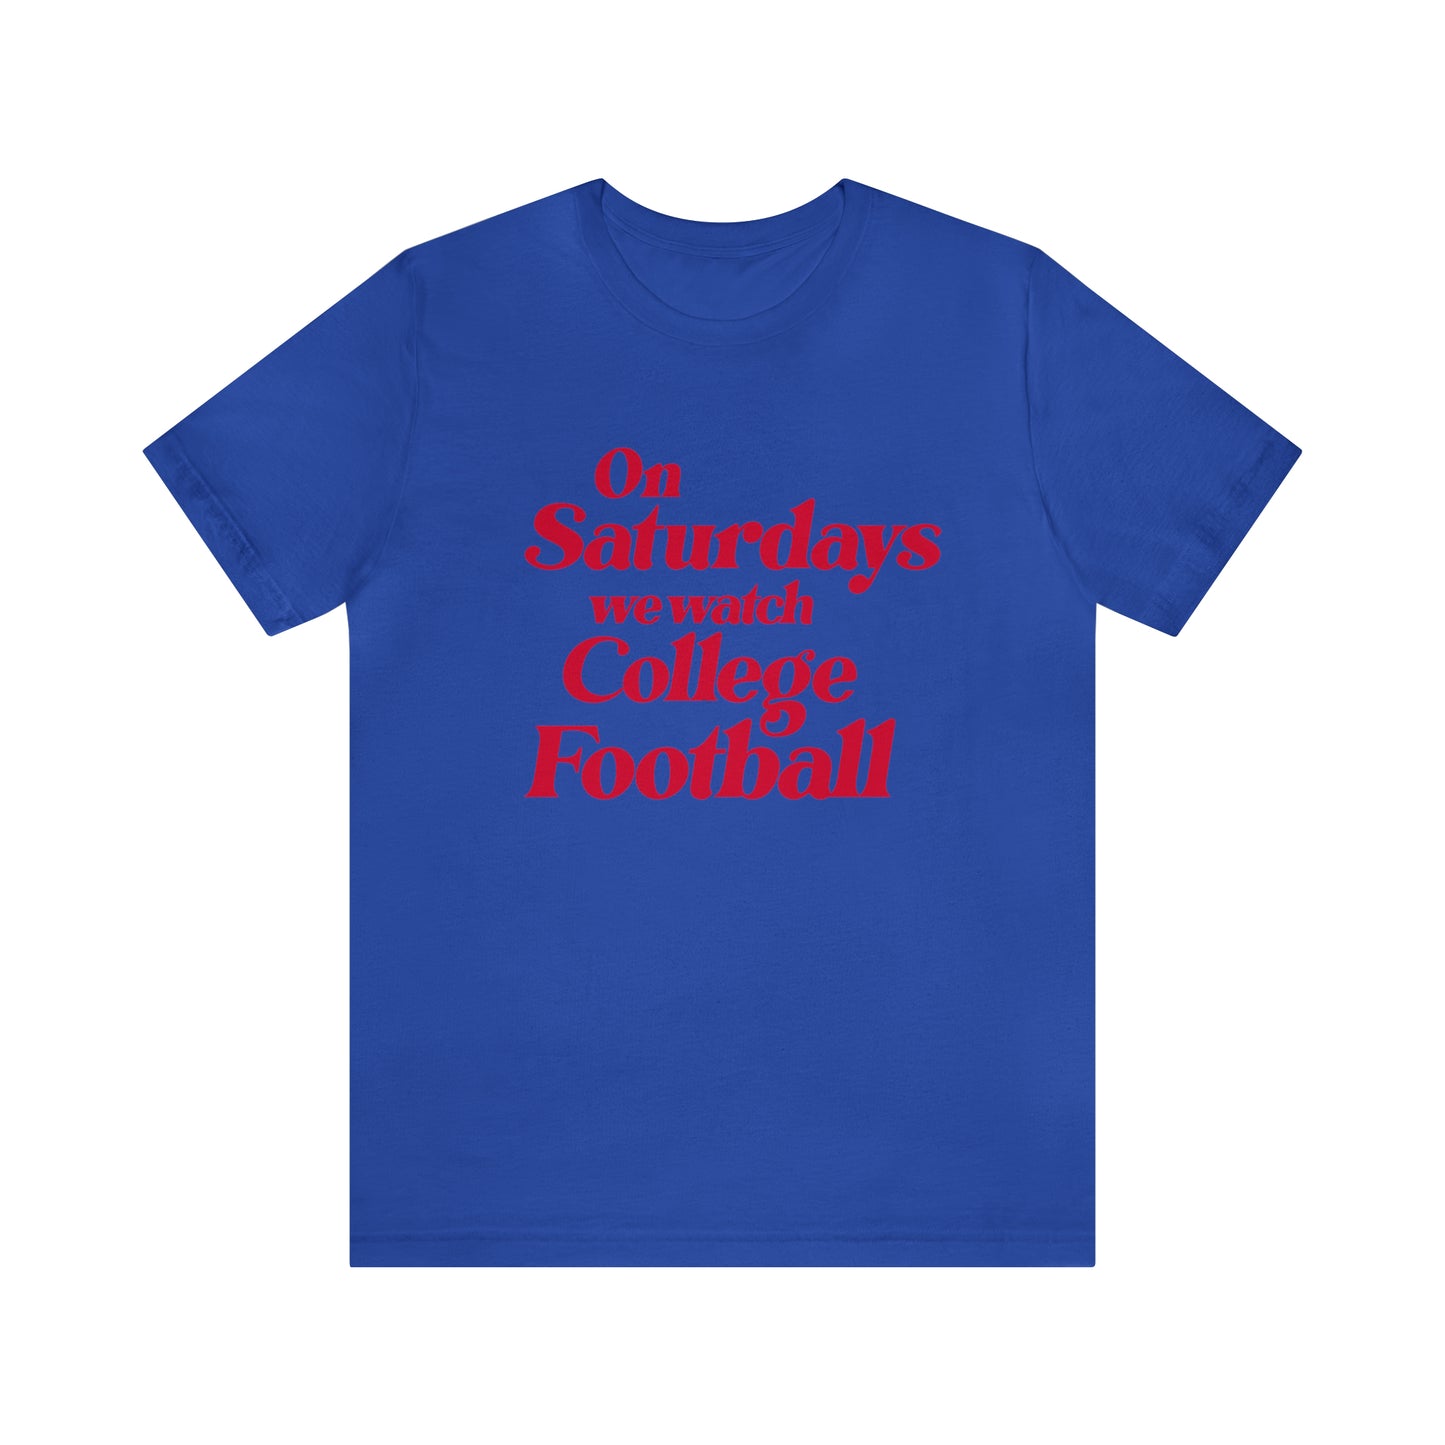 On Saturdays we watch College Football - Unisex T-shirt